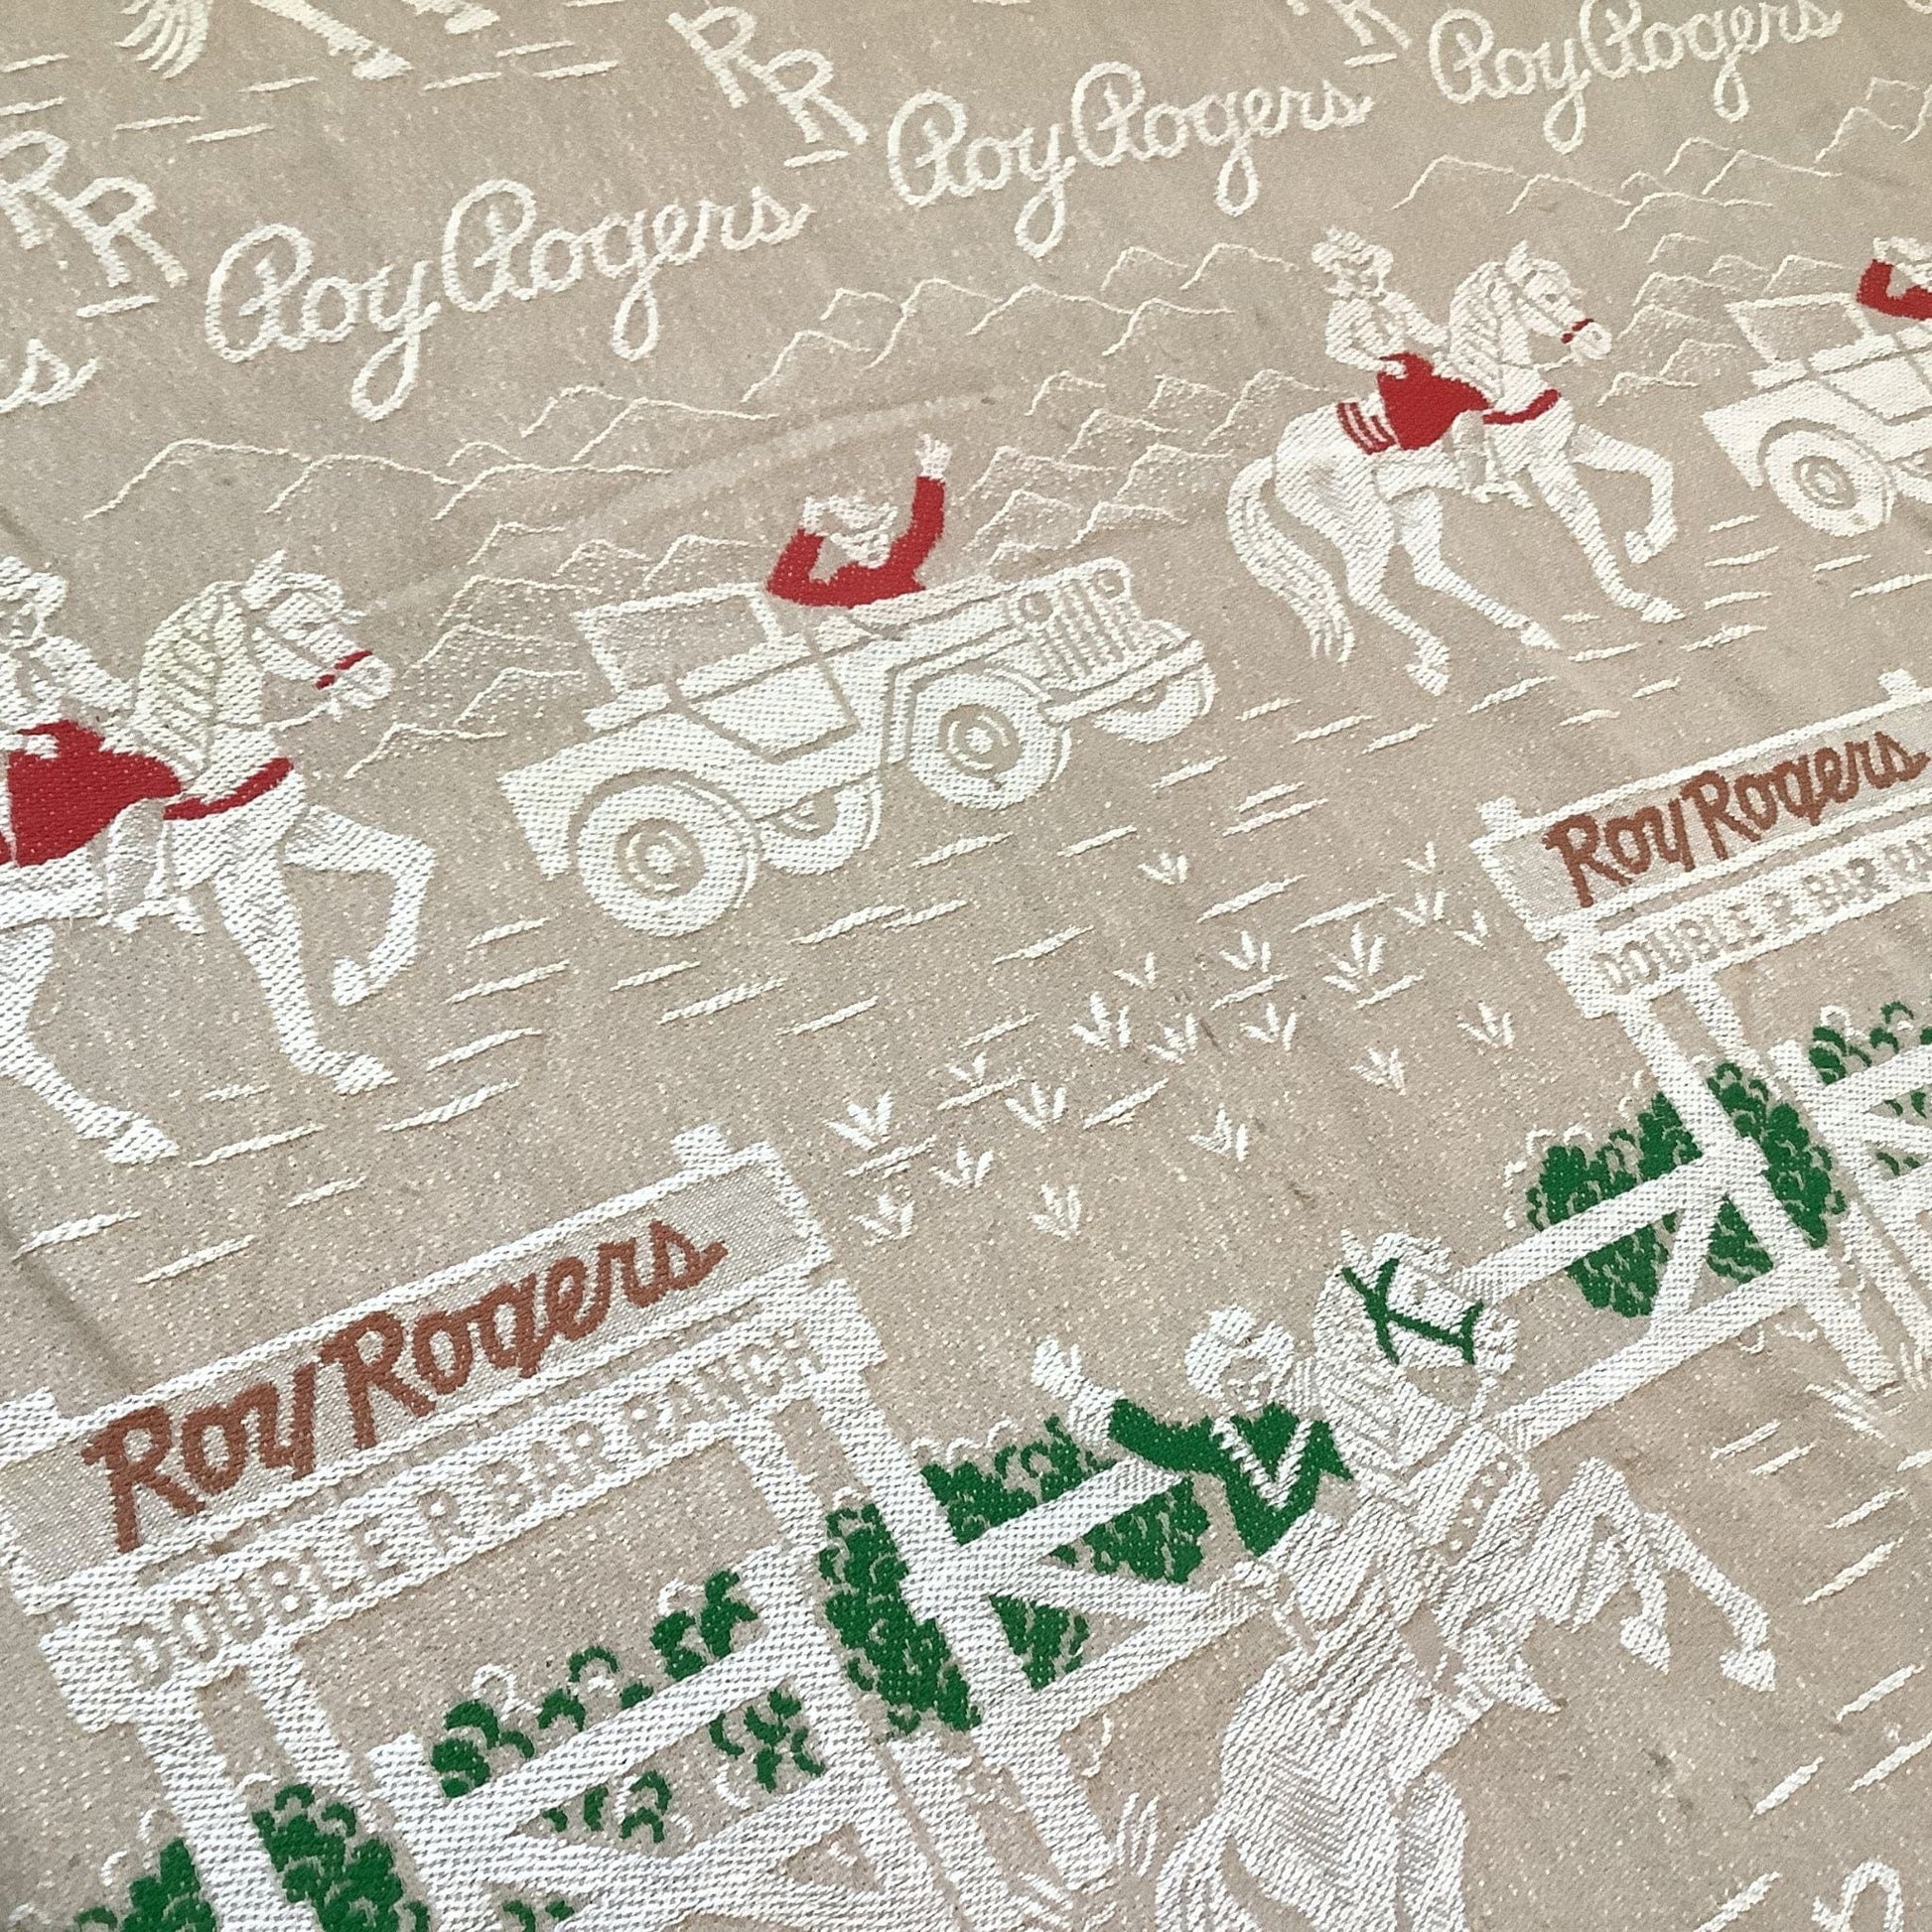 Roy Rogers 1950s Bedspread Multi / Cotton / Vintage 1950s